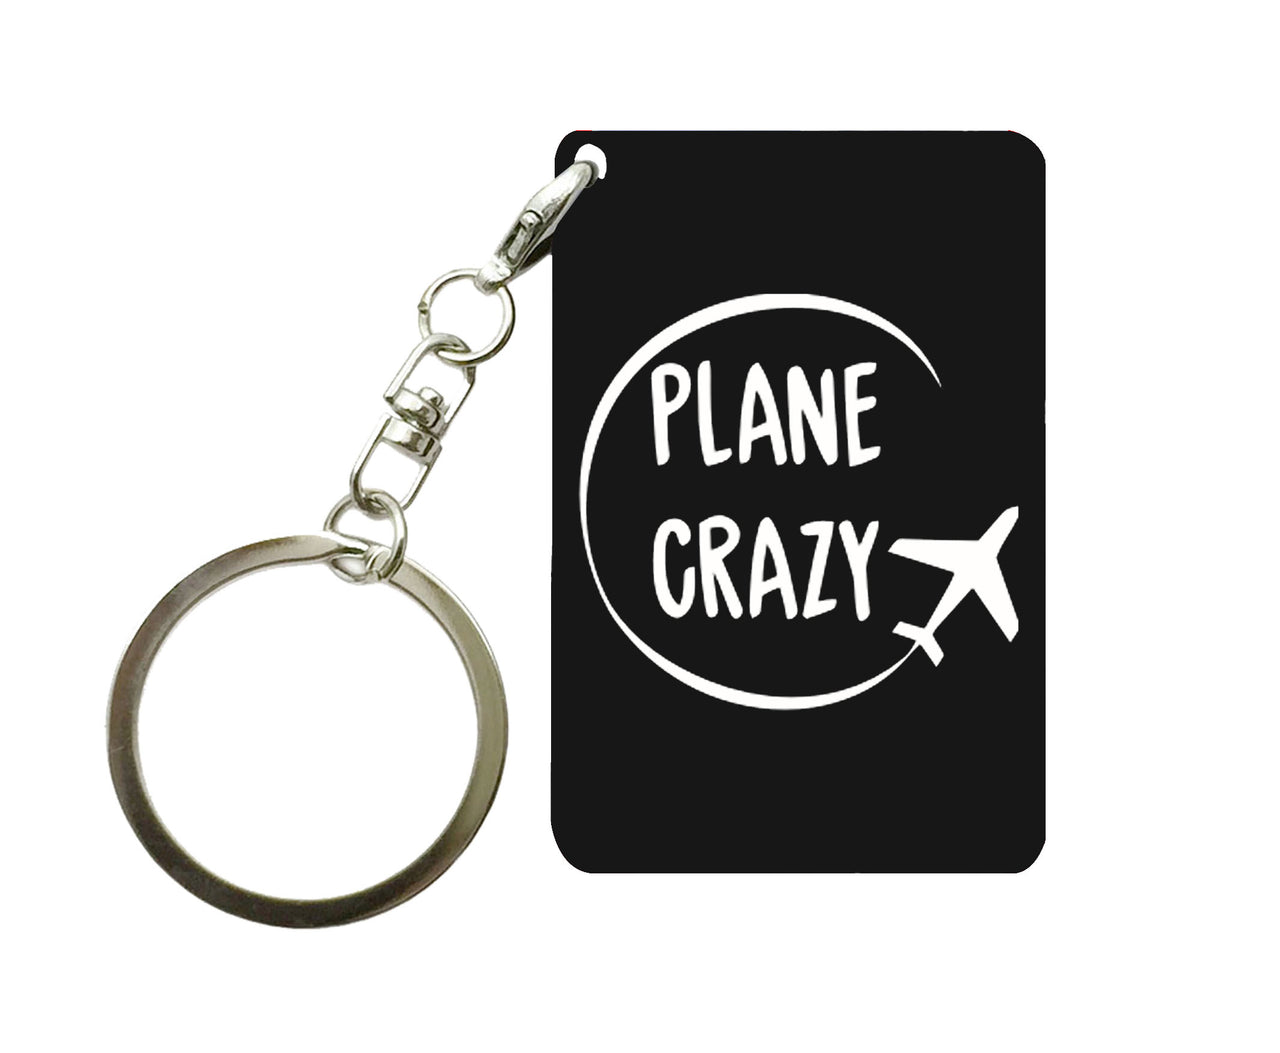 Plane Crazy Designed Key Chains